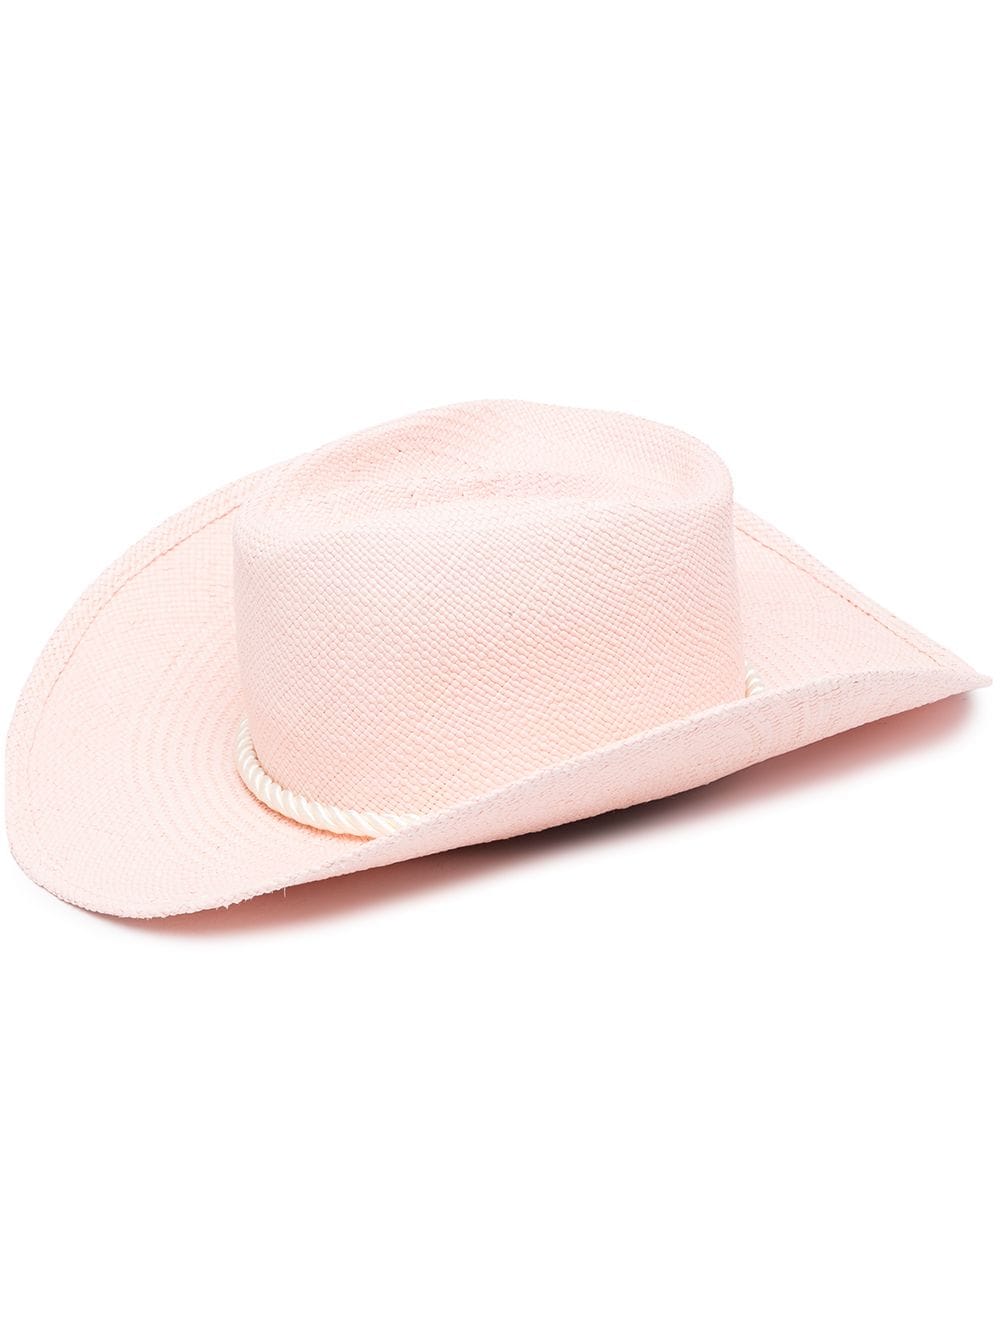 Gladys Tamez Zuma Cowboy Hat In Pink